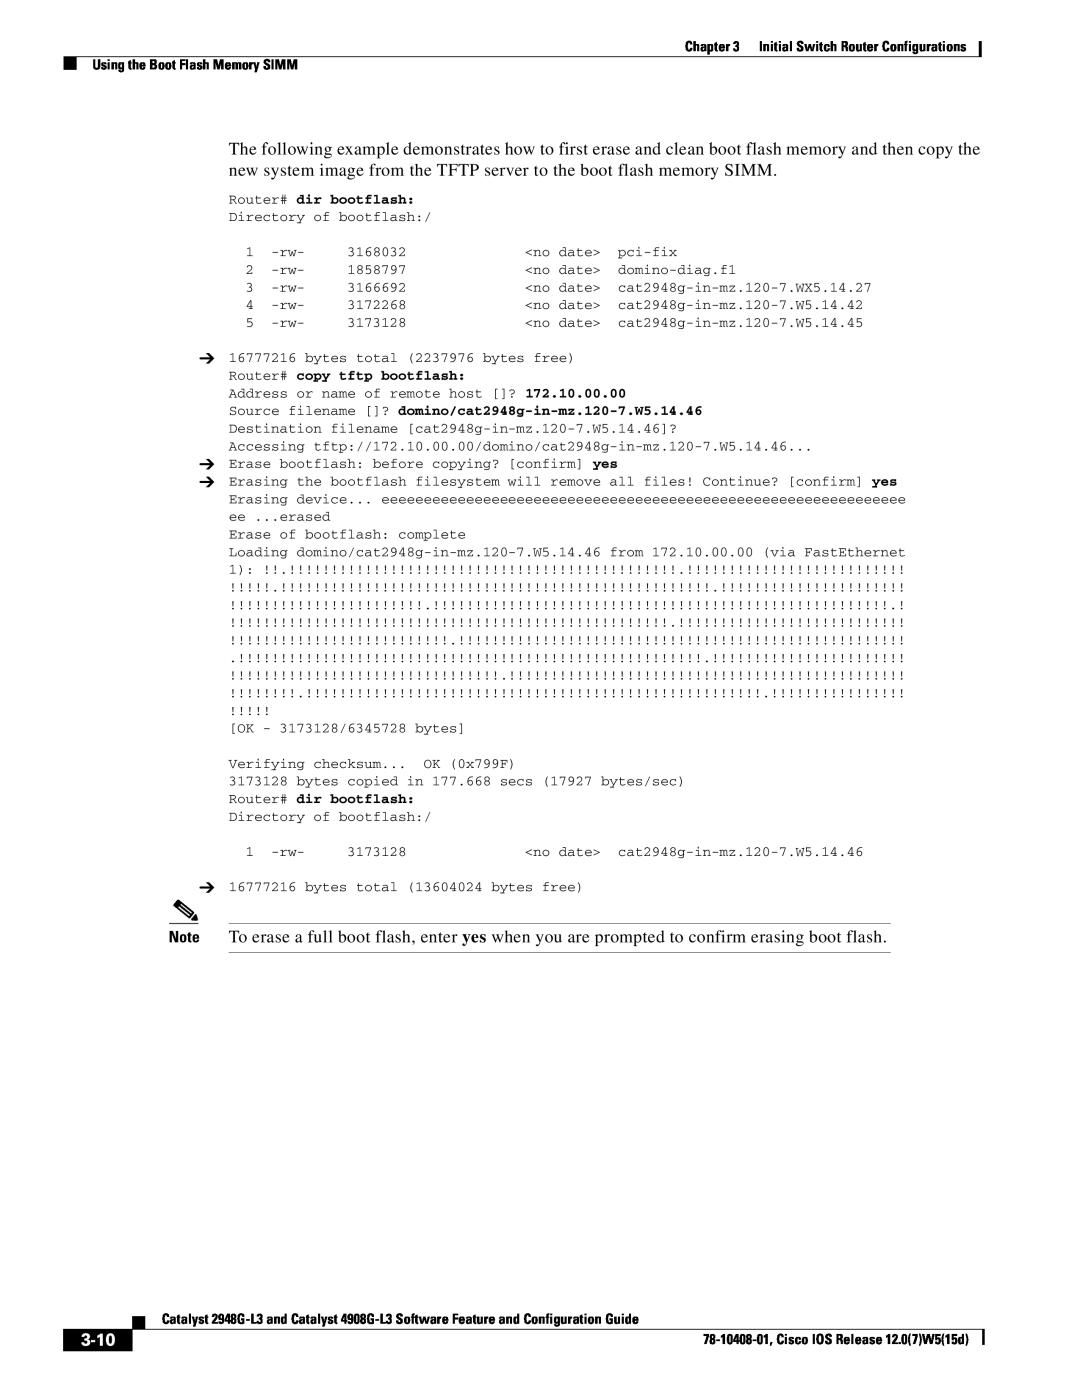 Cisco Systems manual 3-10 